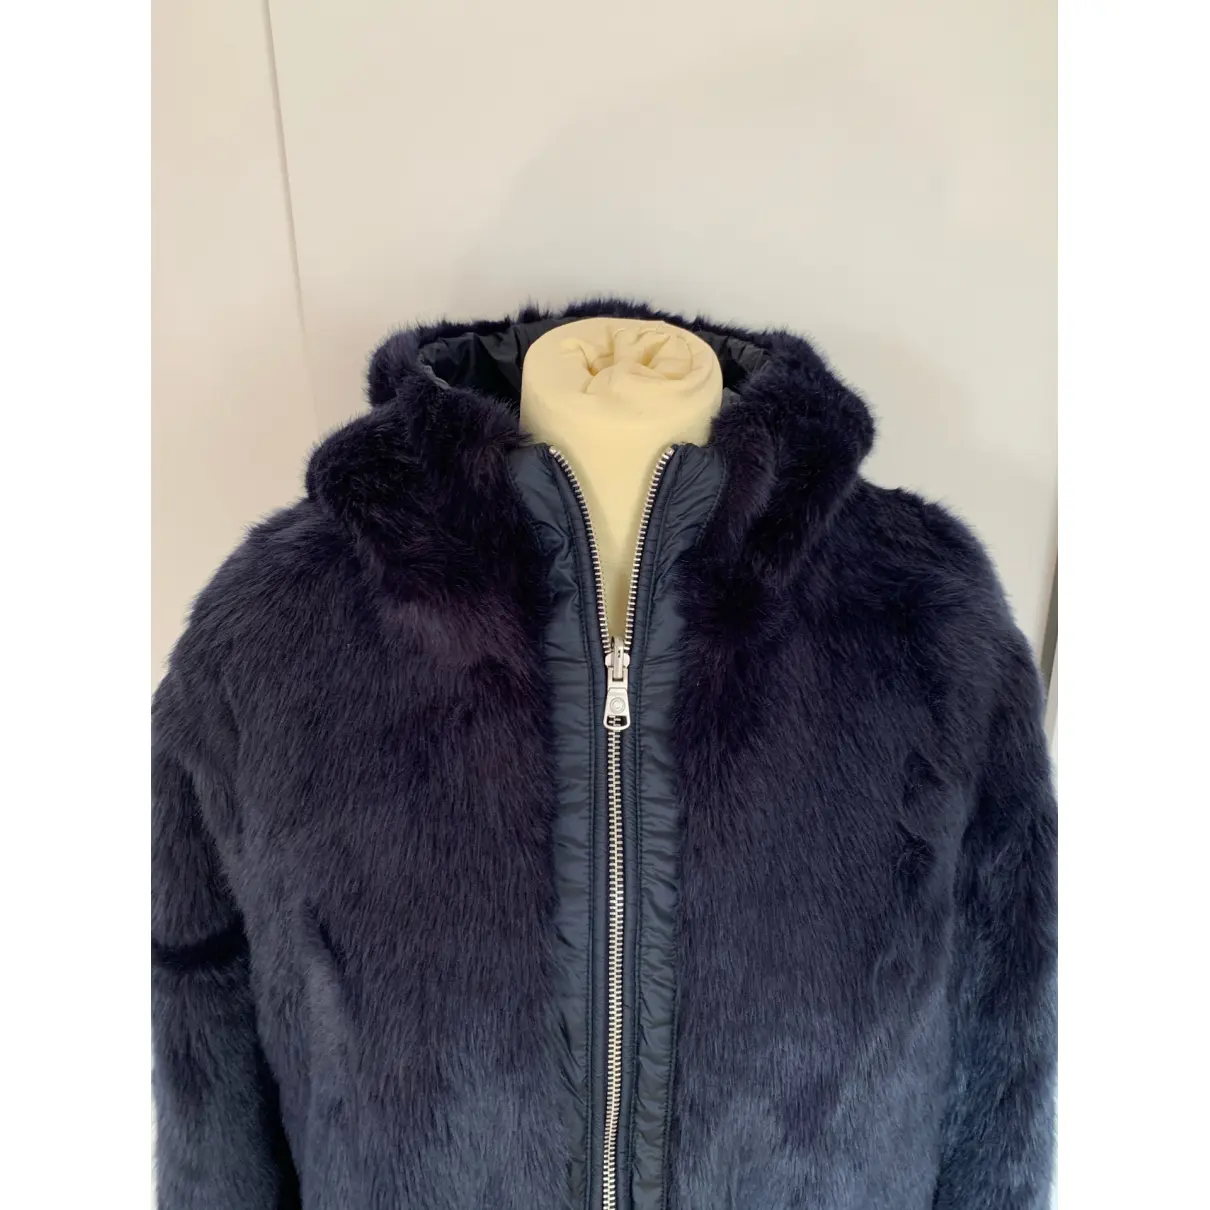 Buy Colmar Faux fur coat online